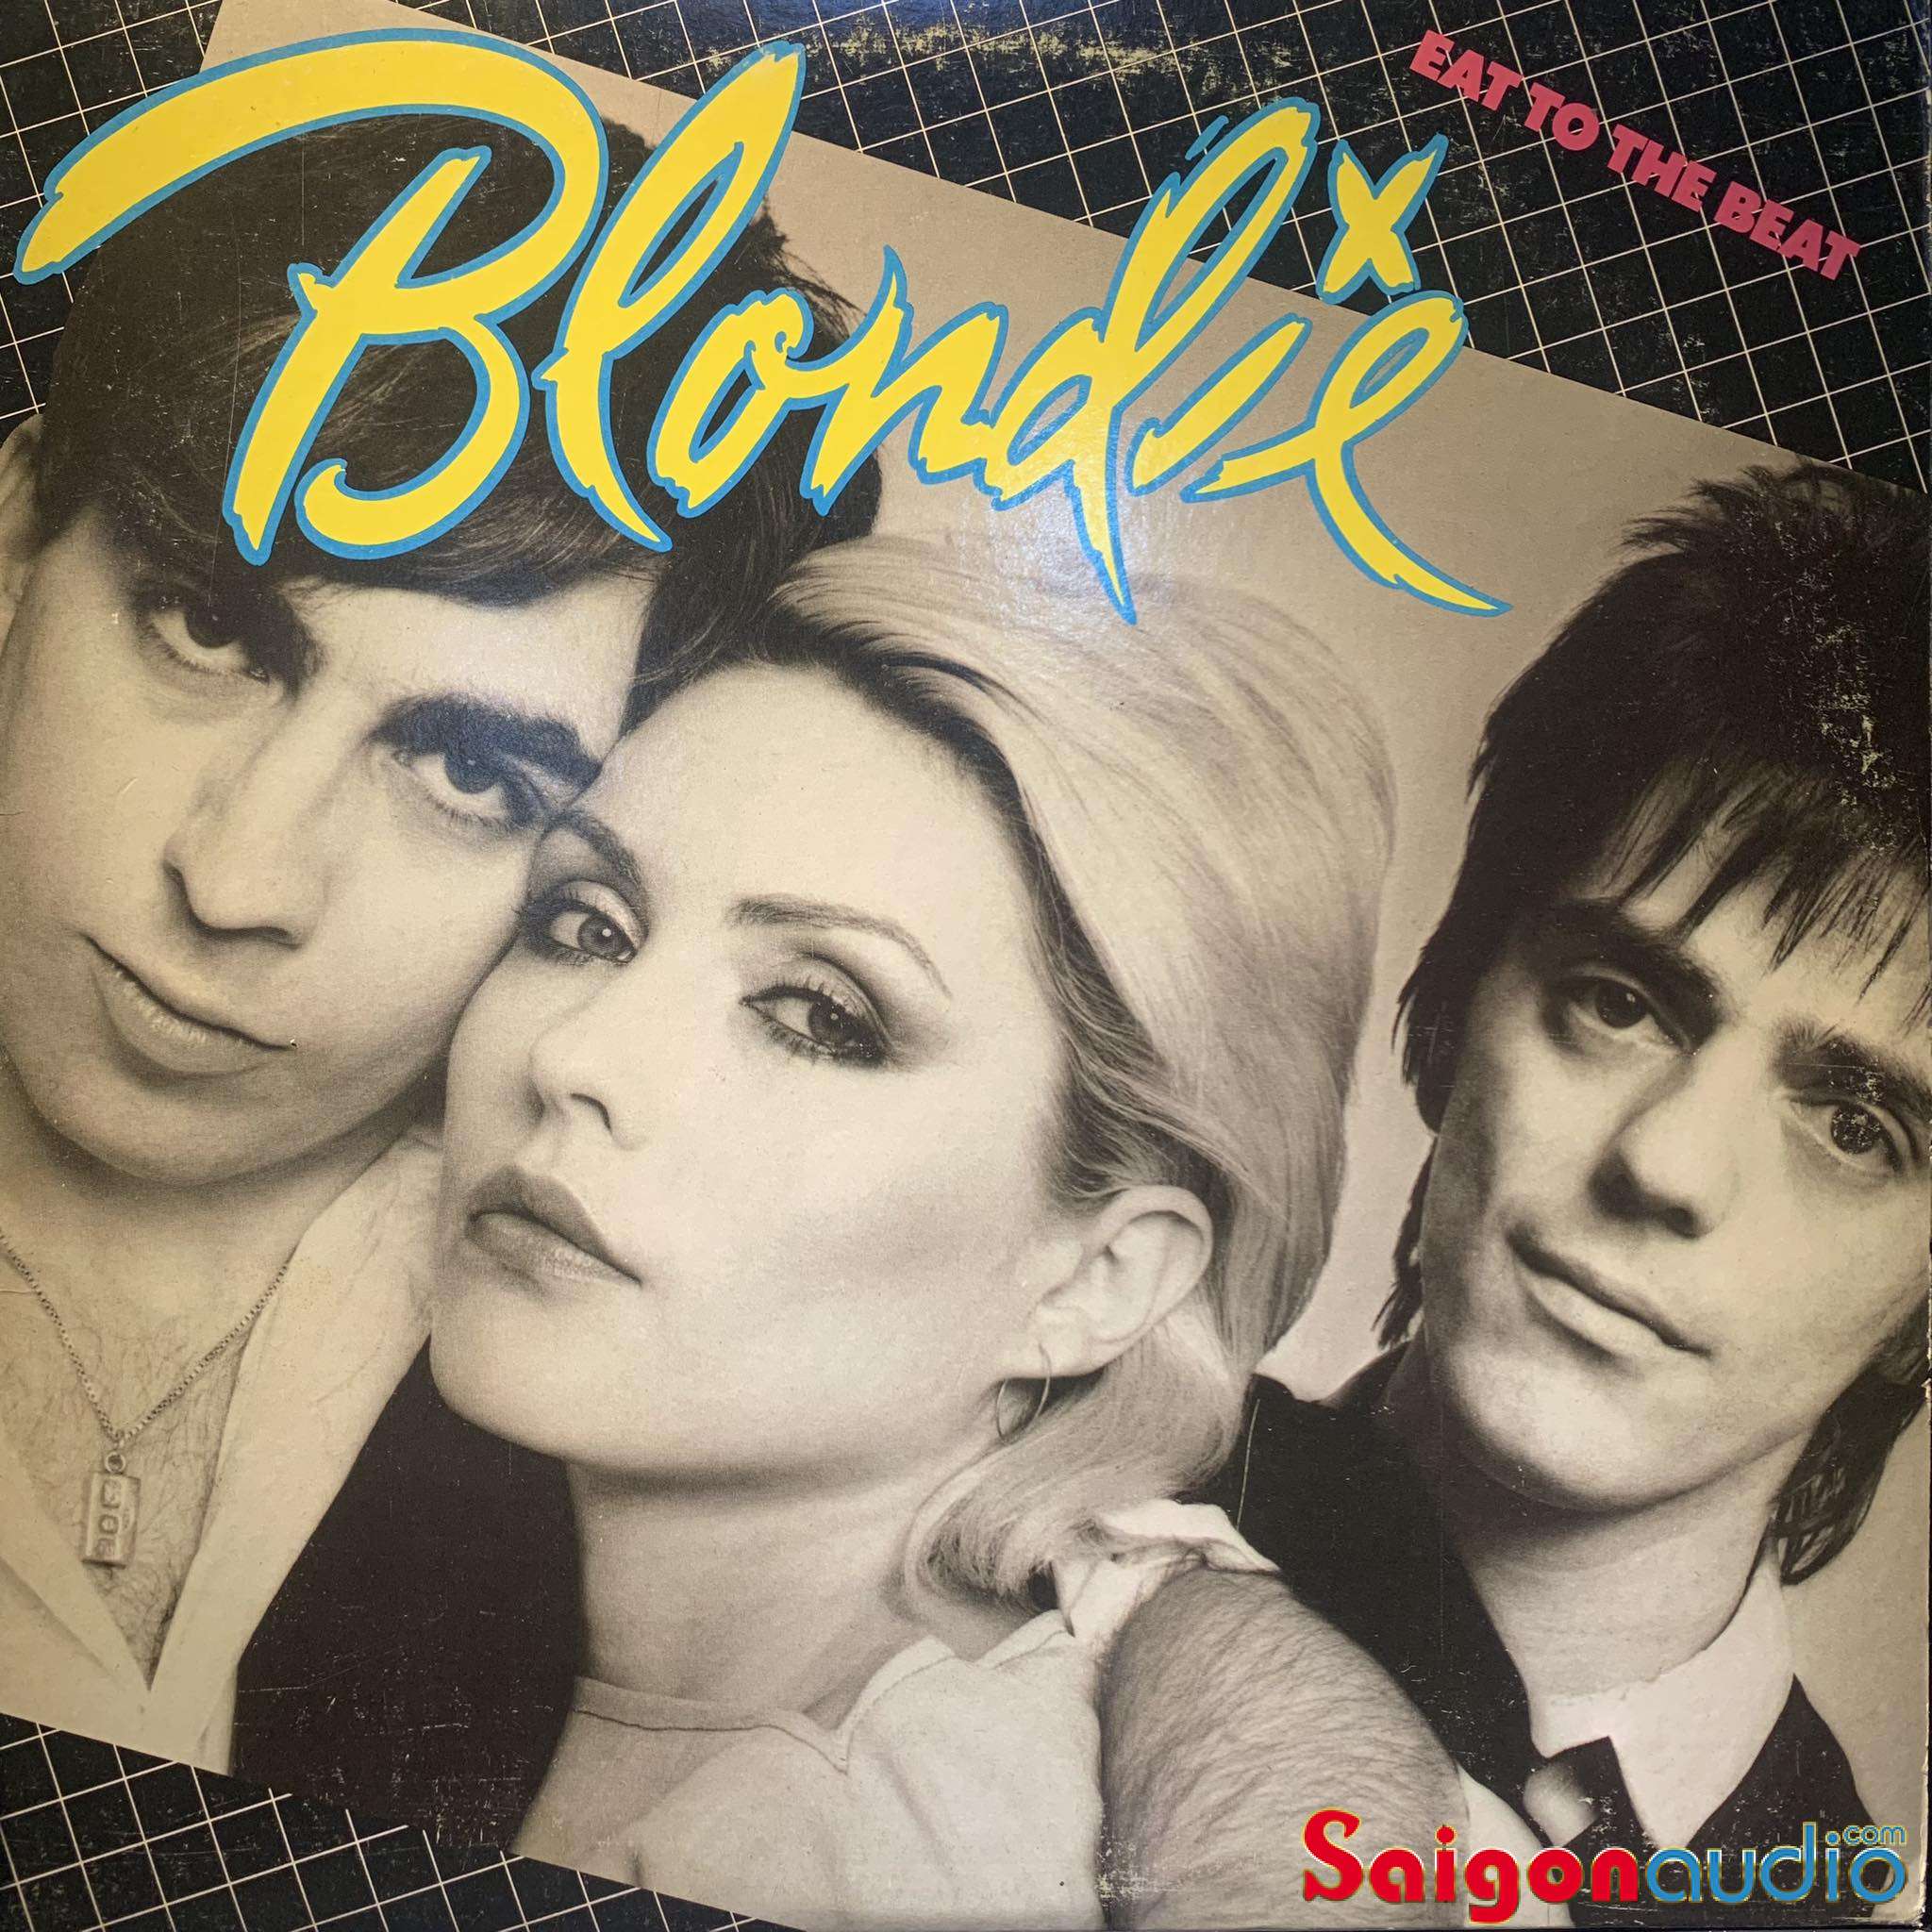 Đĩa than Blondie - Eat to the Beat (Billboards top 10 albums of 1980) | LP Vinyl Records